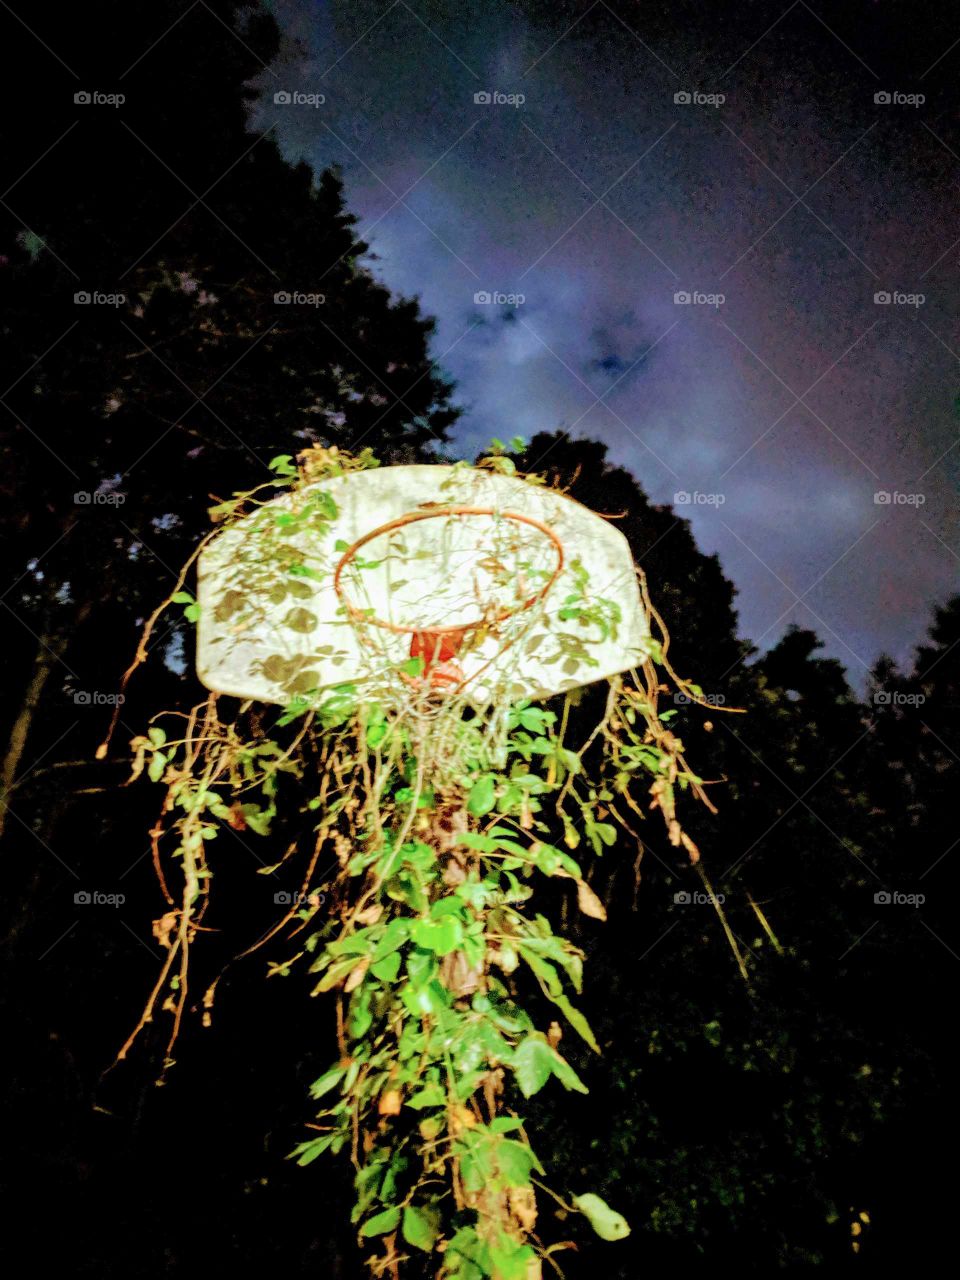 Abandoned Basketball Hoop Covered in Vines